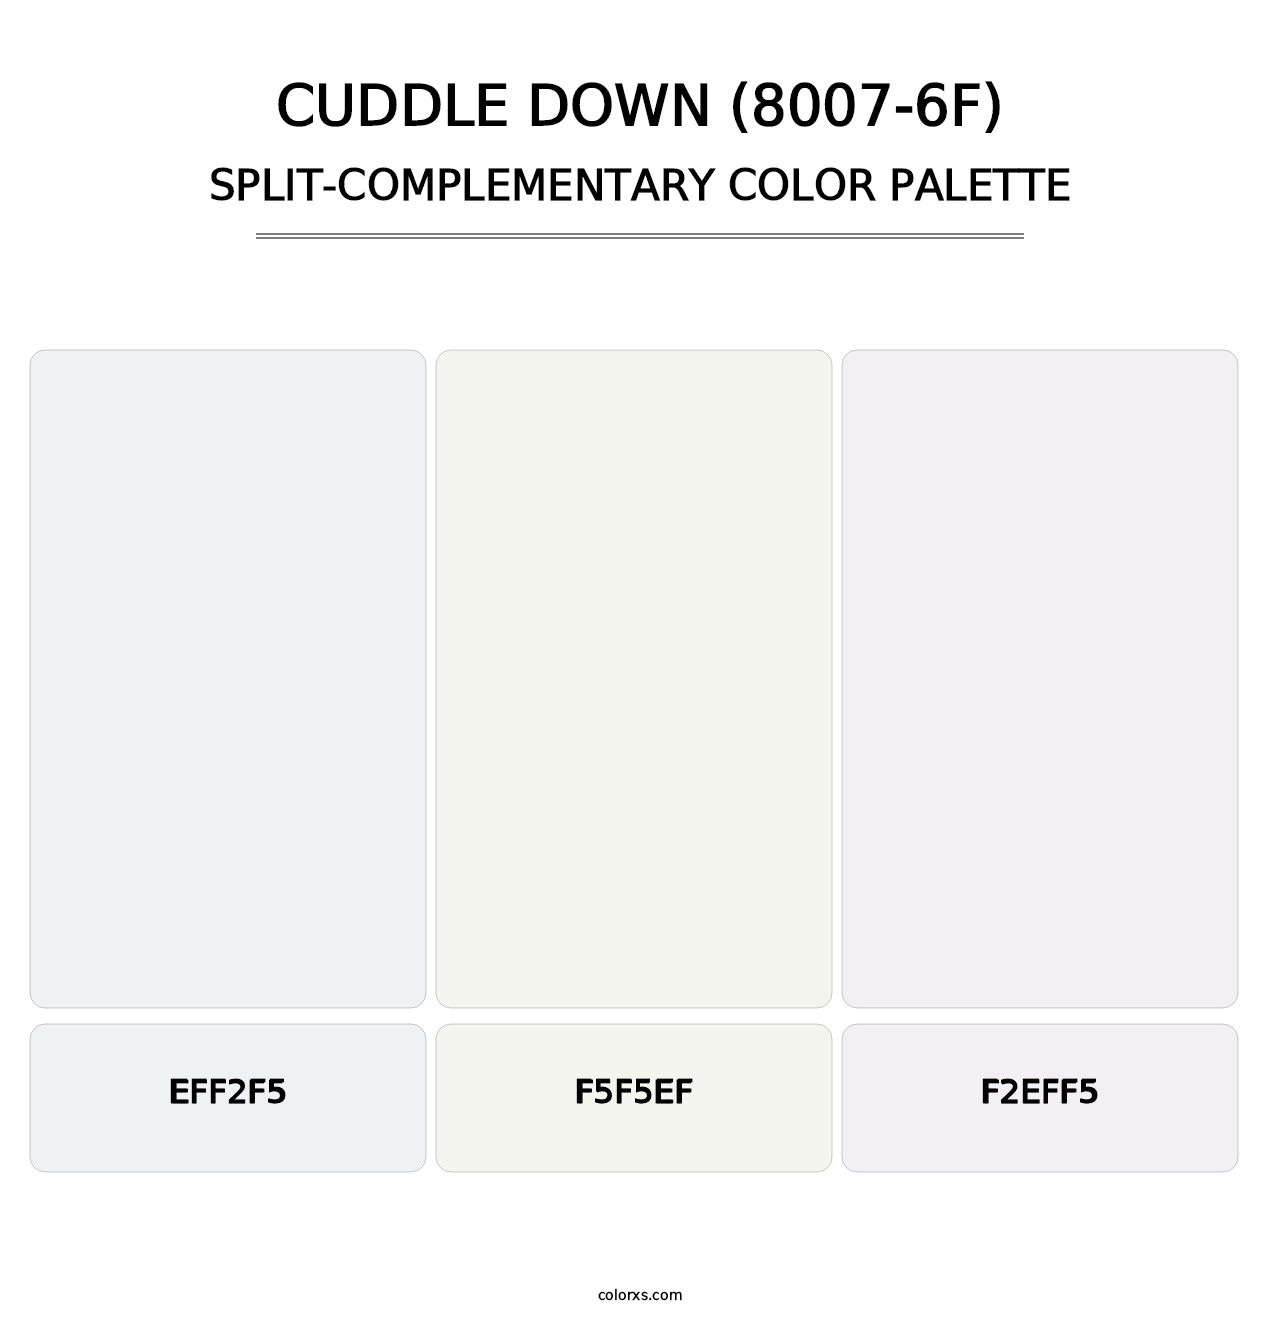 Cuddle Down (8007-6F) - Split-Complementary Color Palette